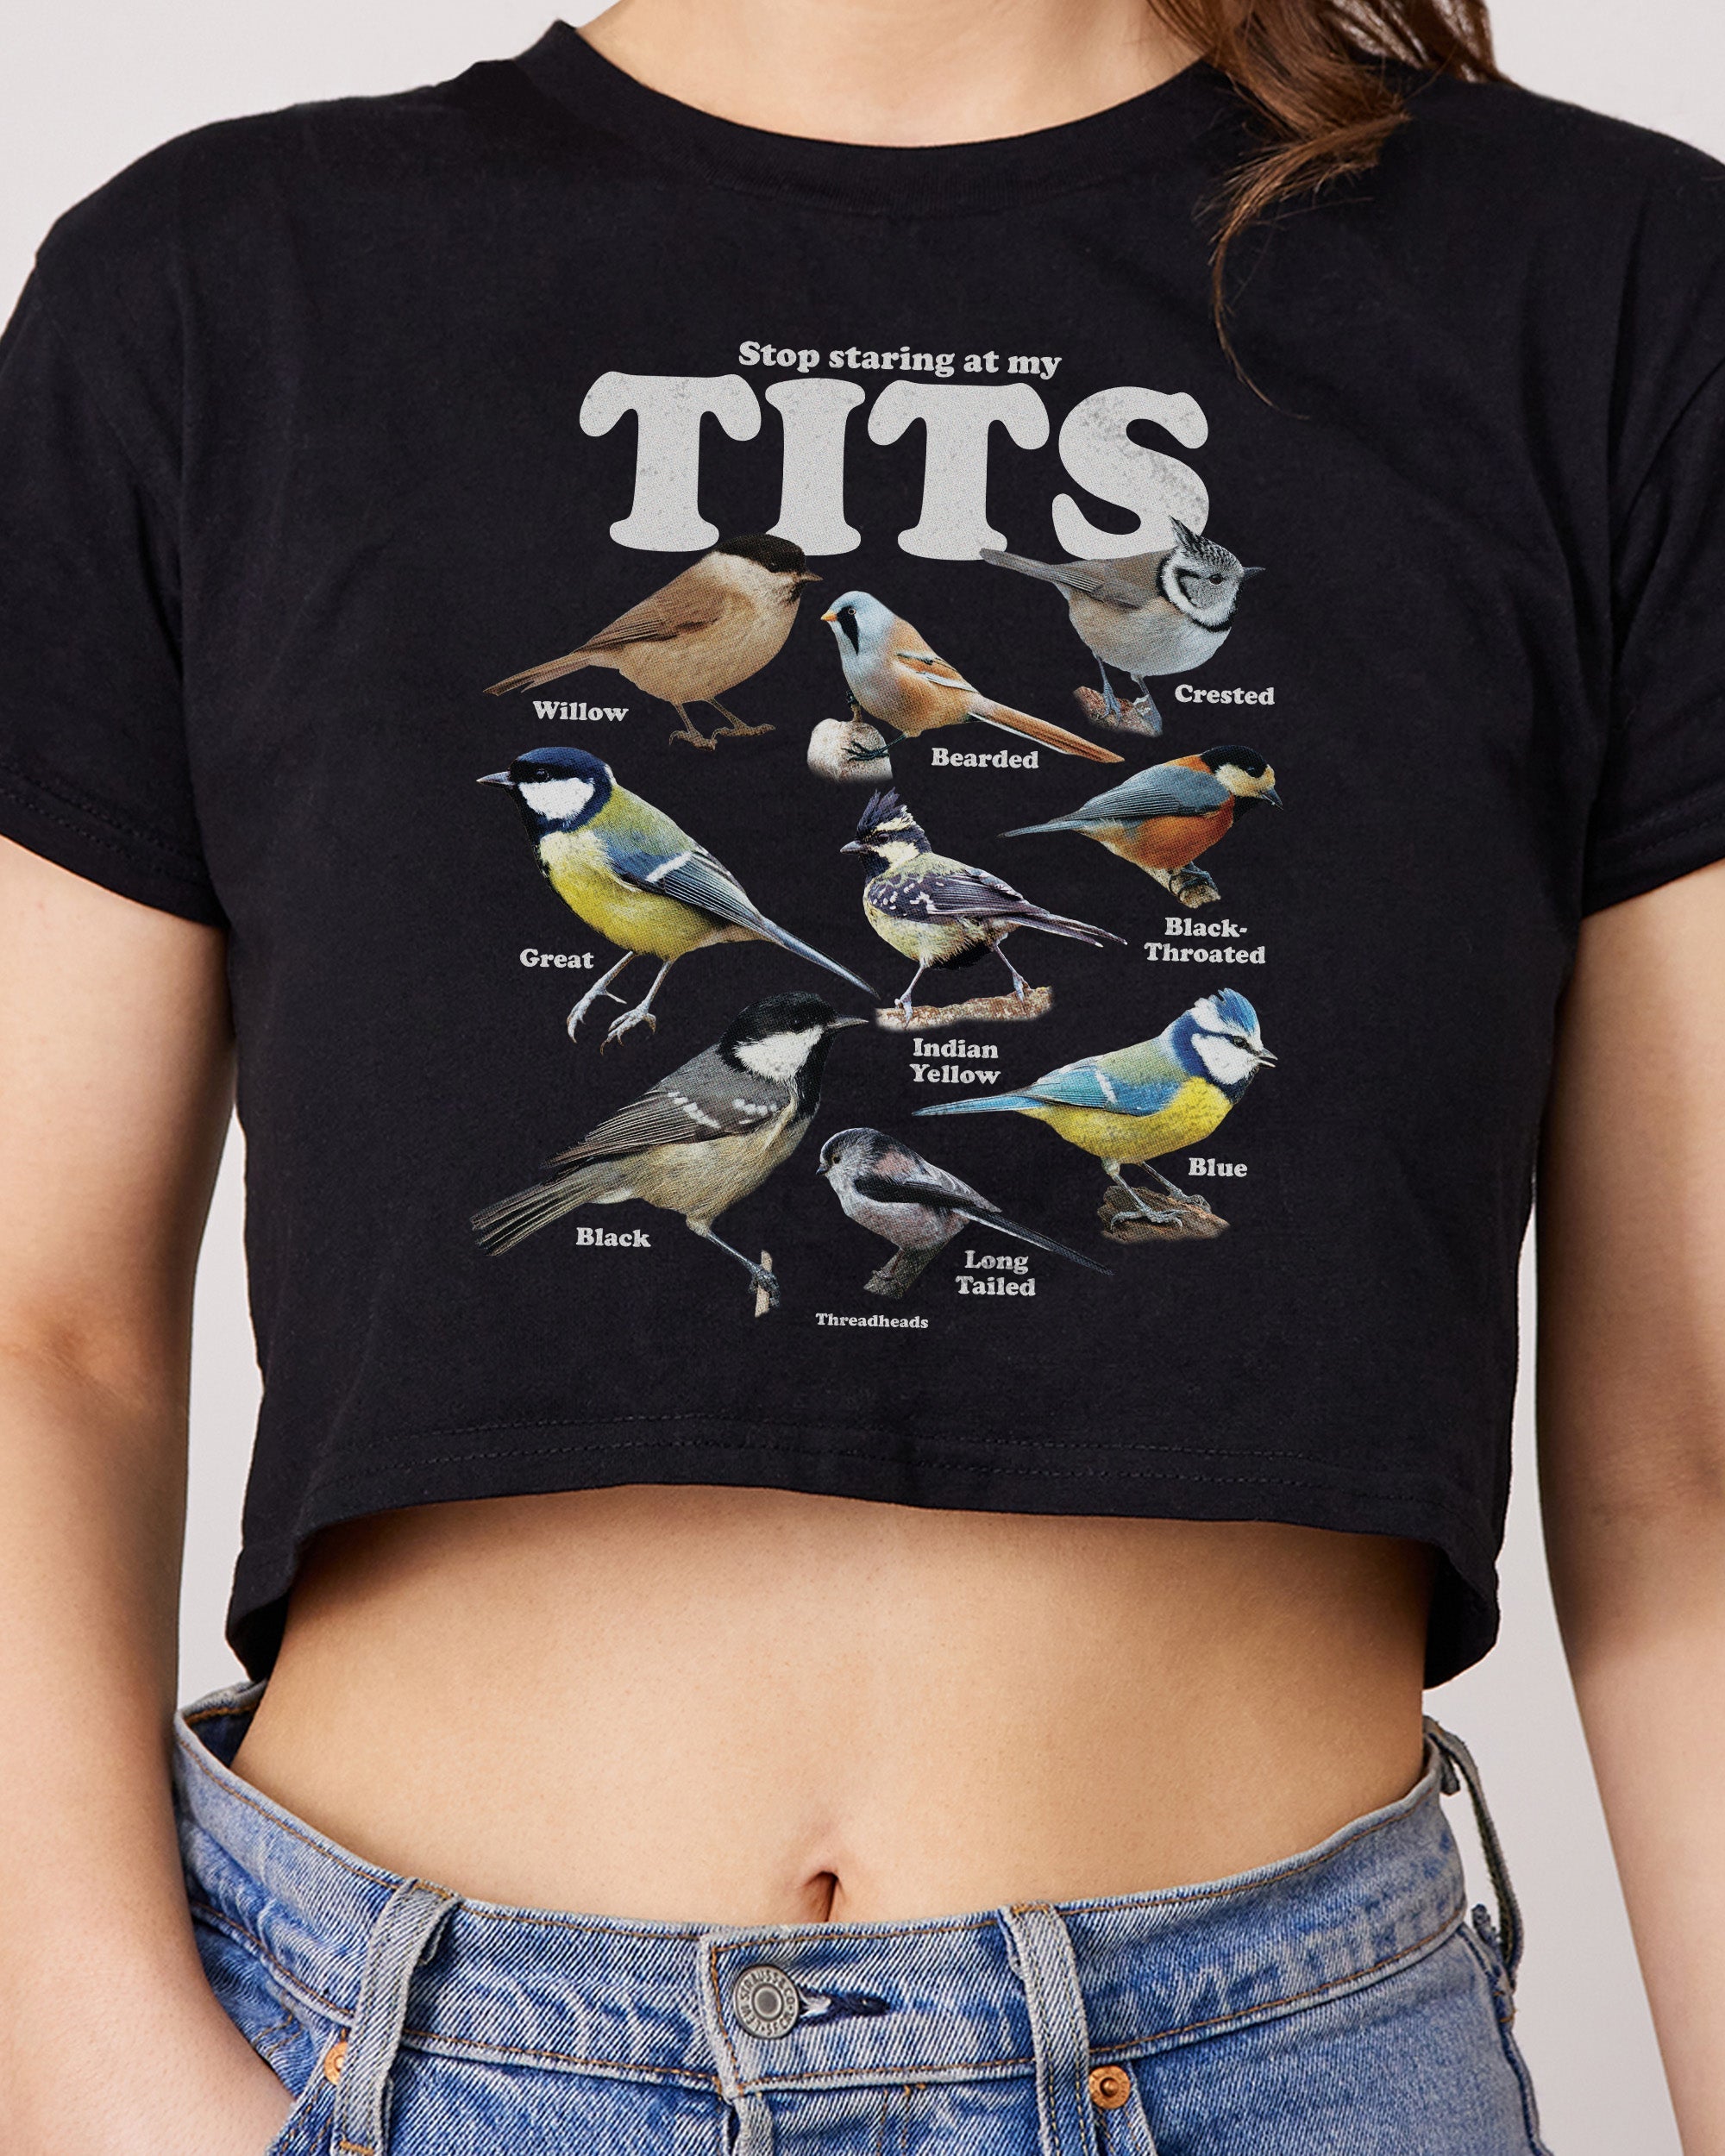 Stop Staring At My Tits T-Shirt, Funny Graphic T-Shirt